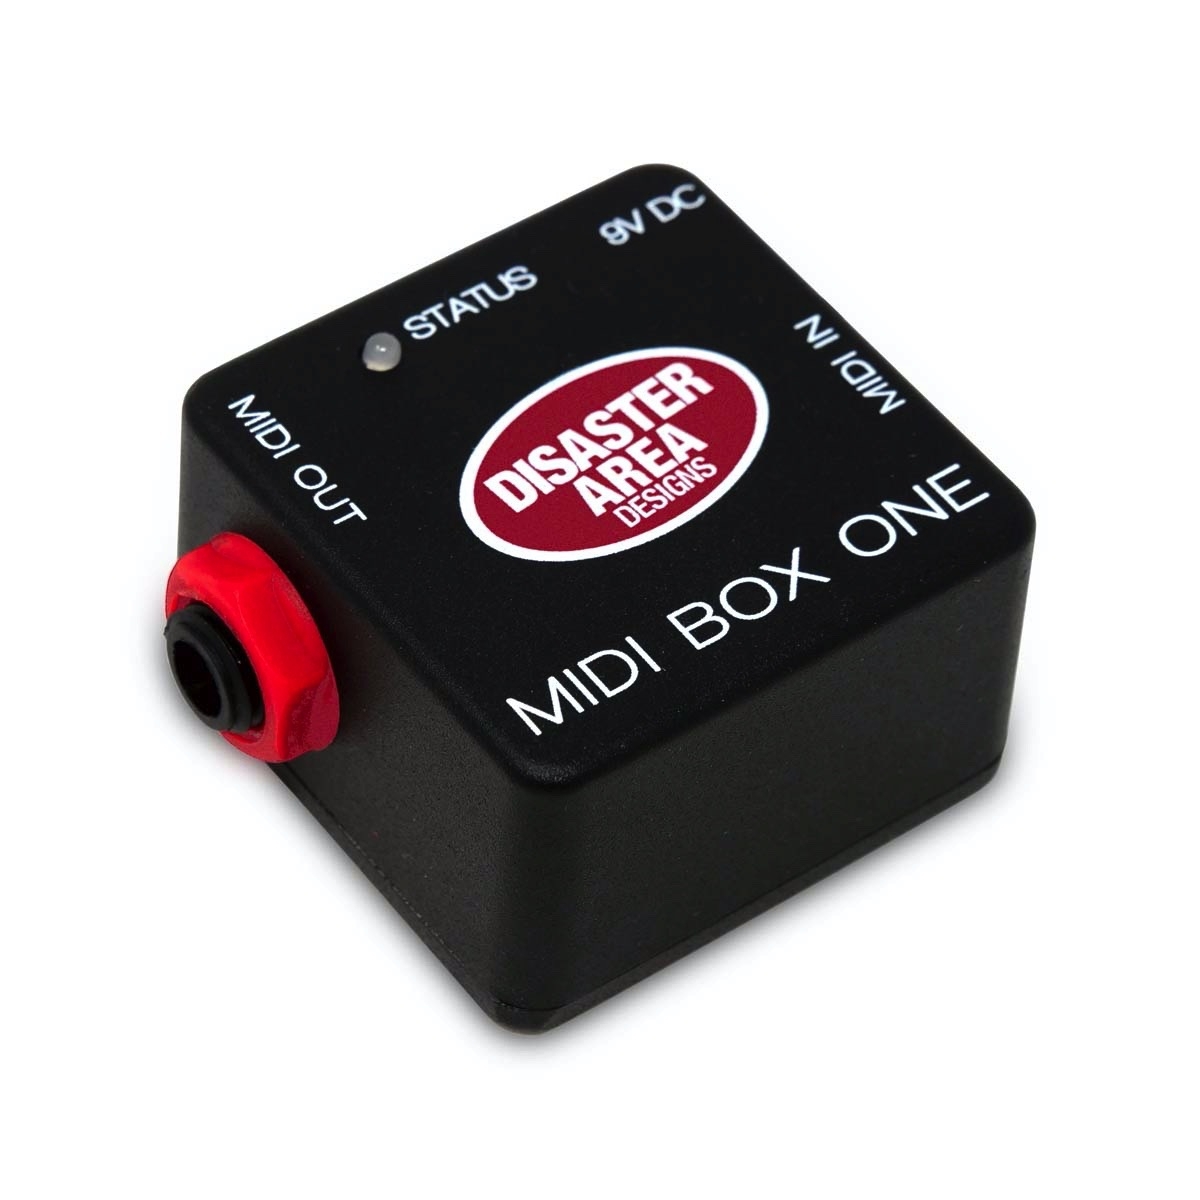 Midi Box One